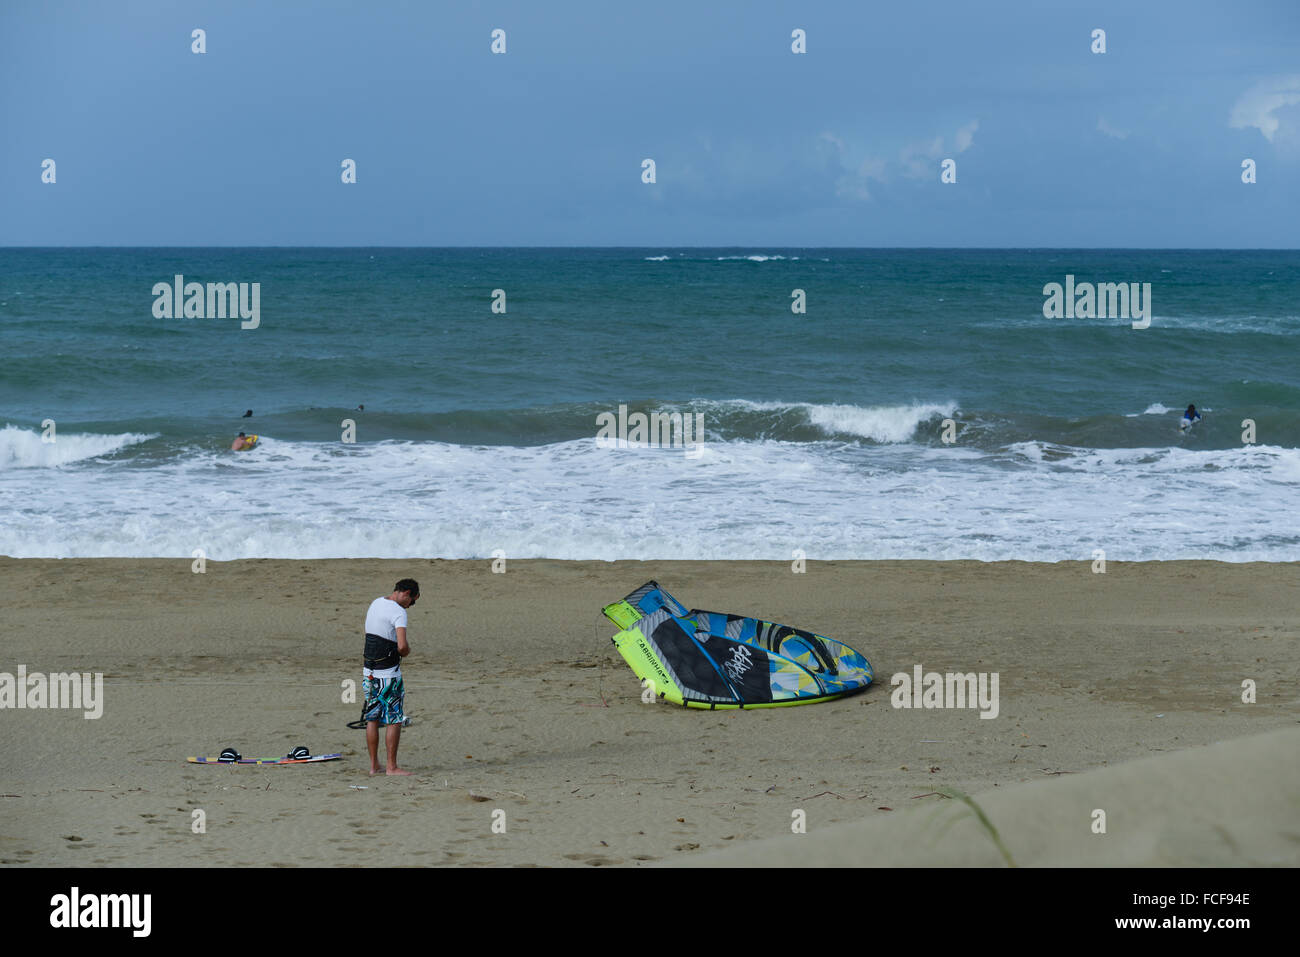 Kitesurfer maschio ottenere pronto. Dorado, Puerto Rico. Isola dei caraibi. Territorio statunitense. Foto Stock